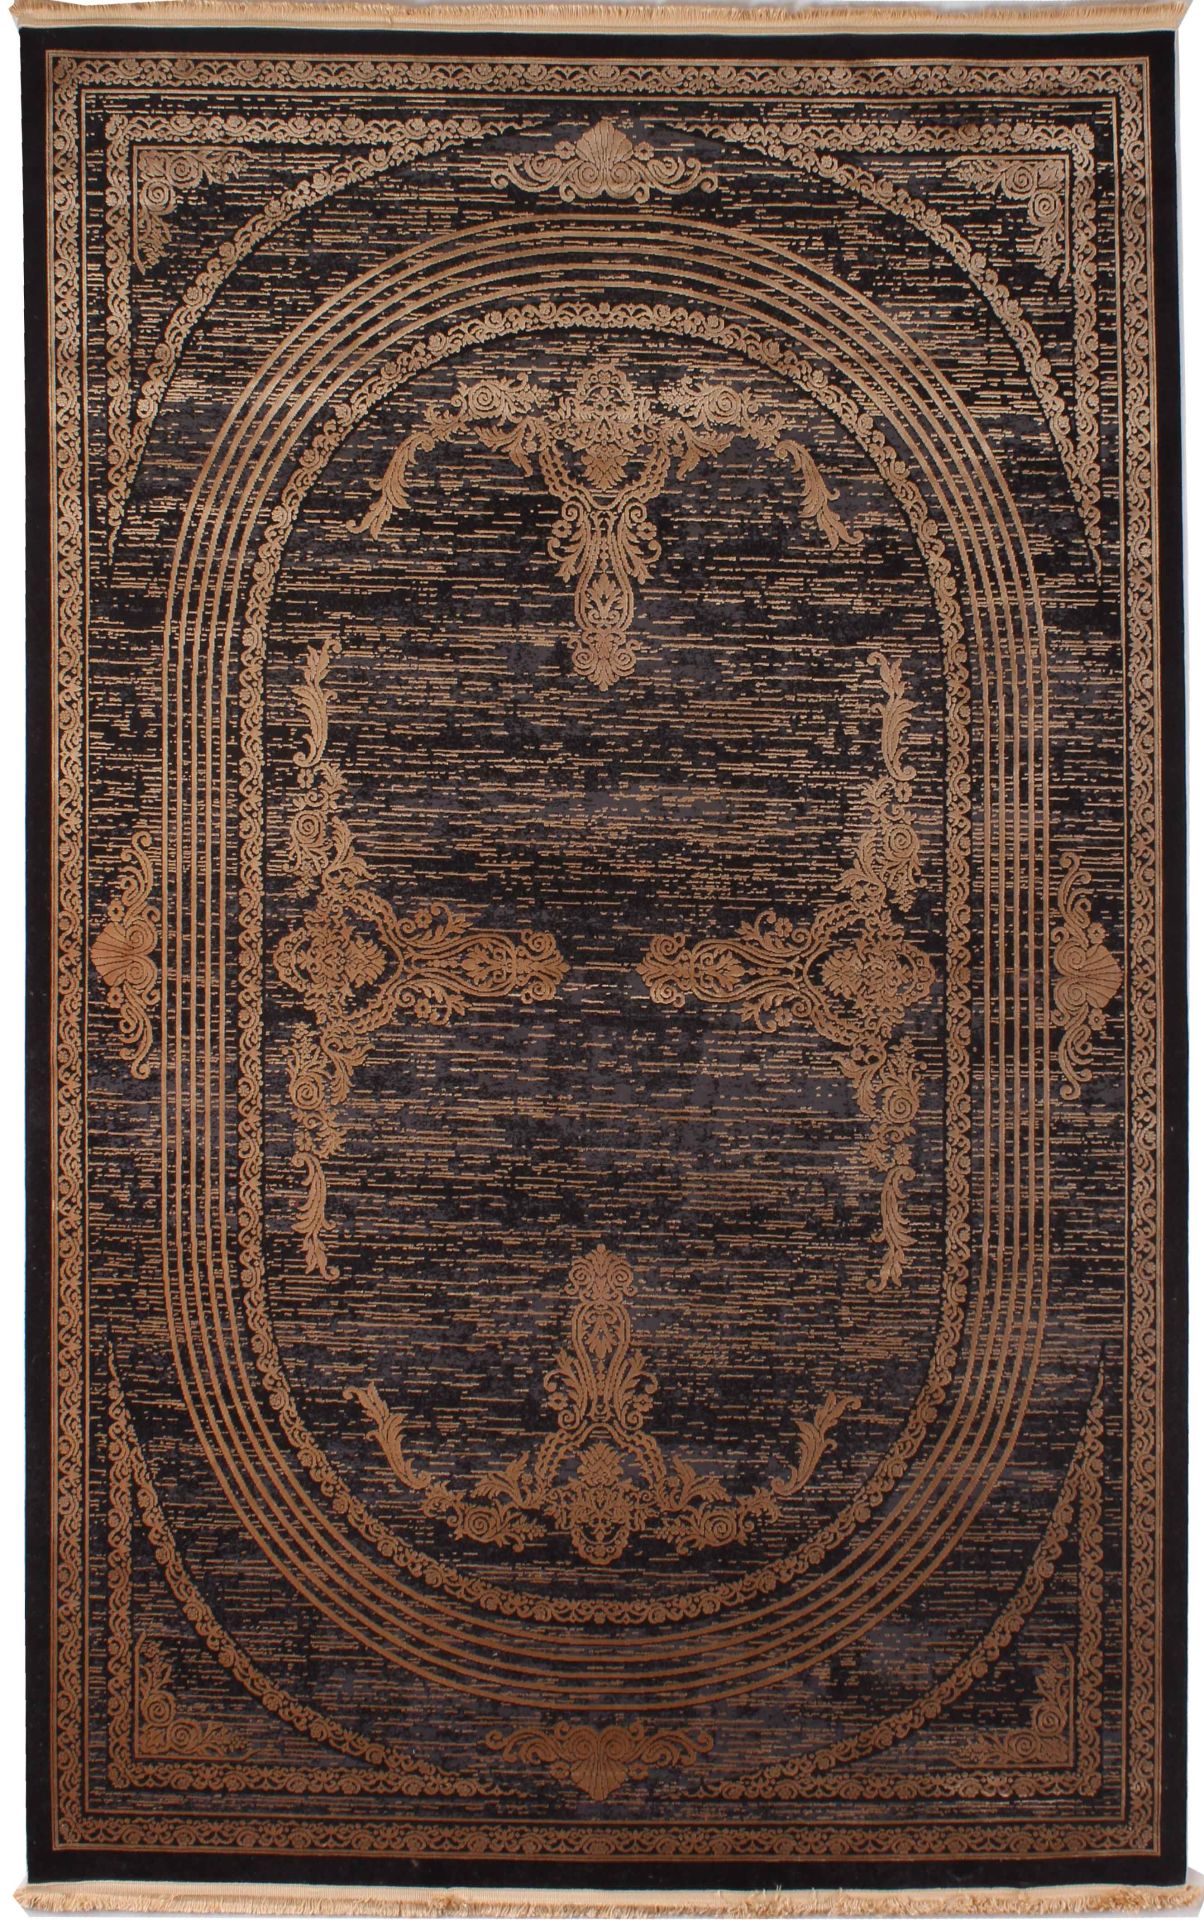  Neo Classic Antique Gold Bamboo Carpet